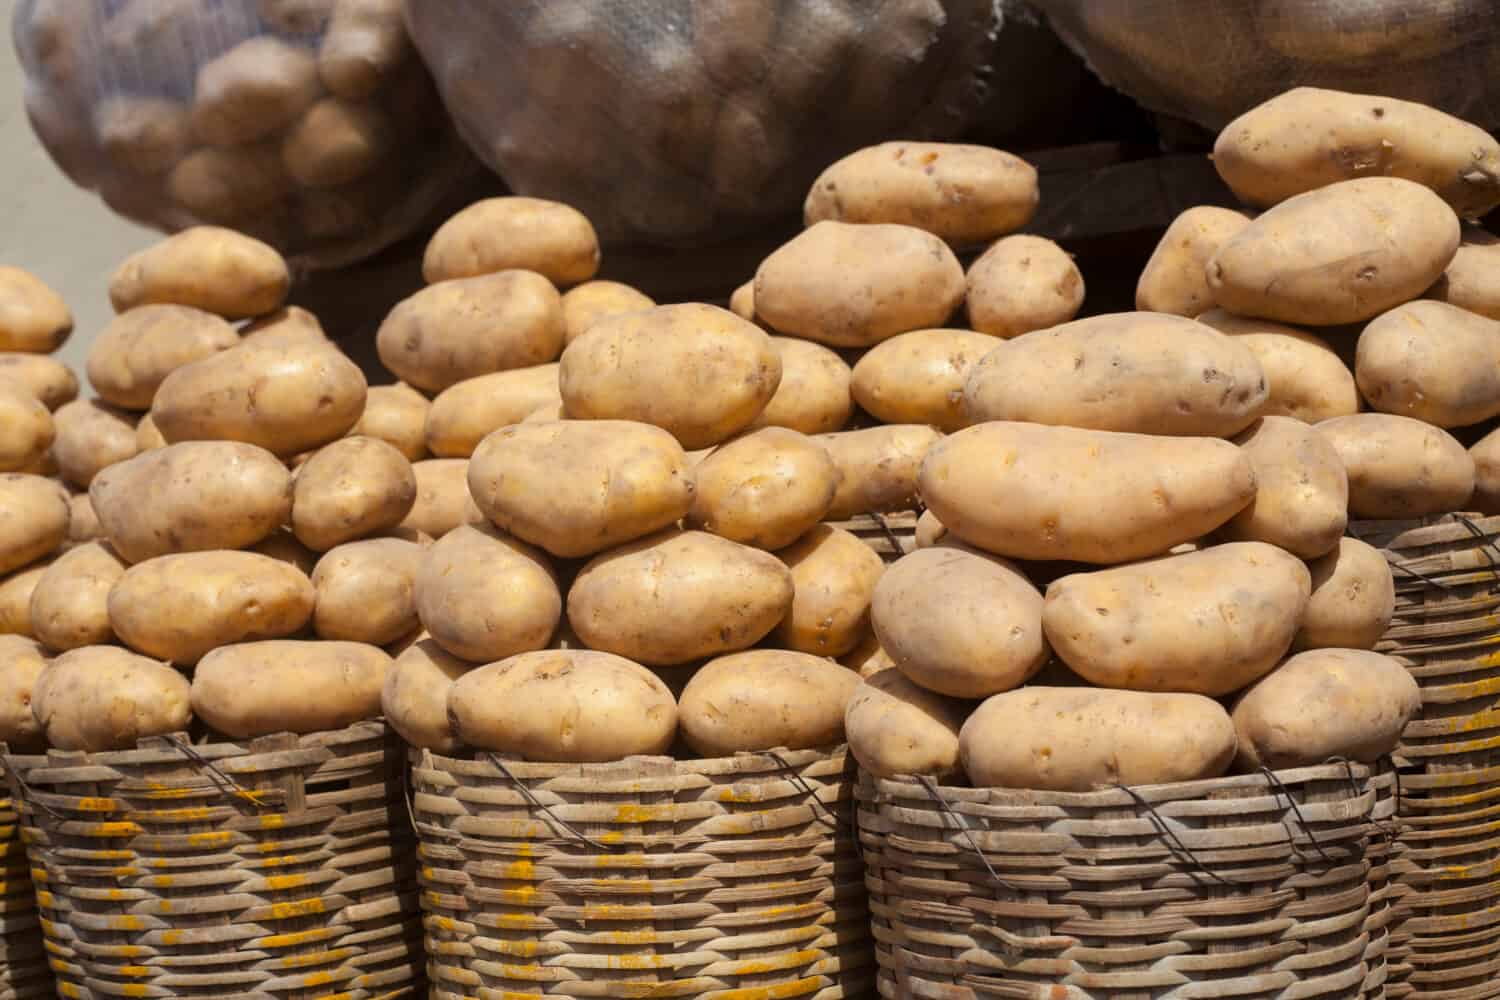 Baskets of fresh Irish Potatoes